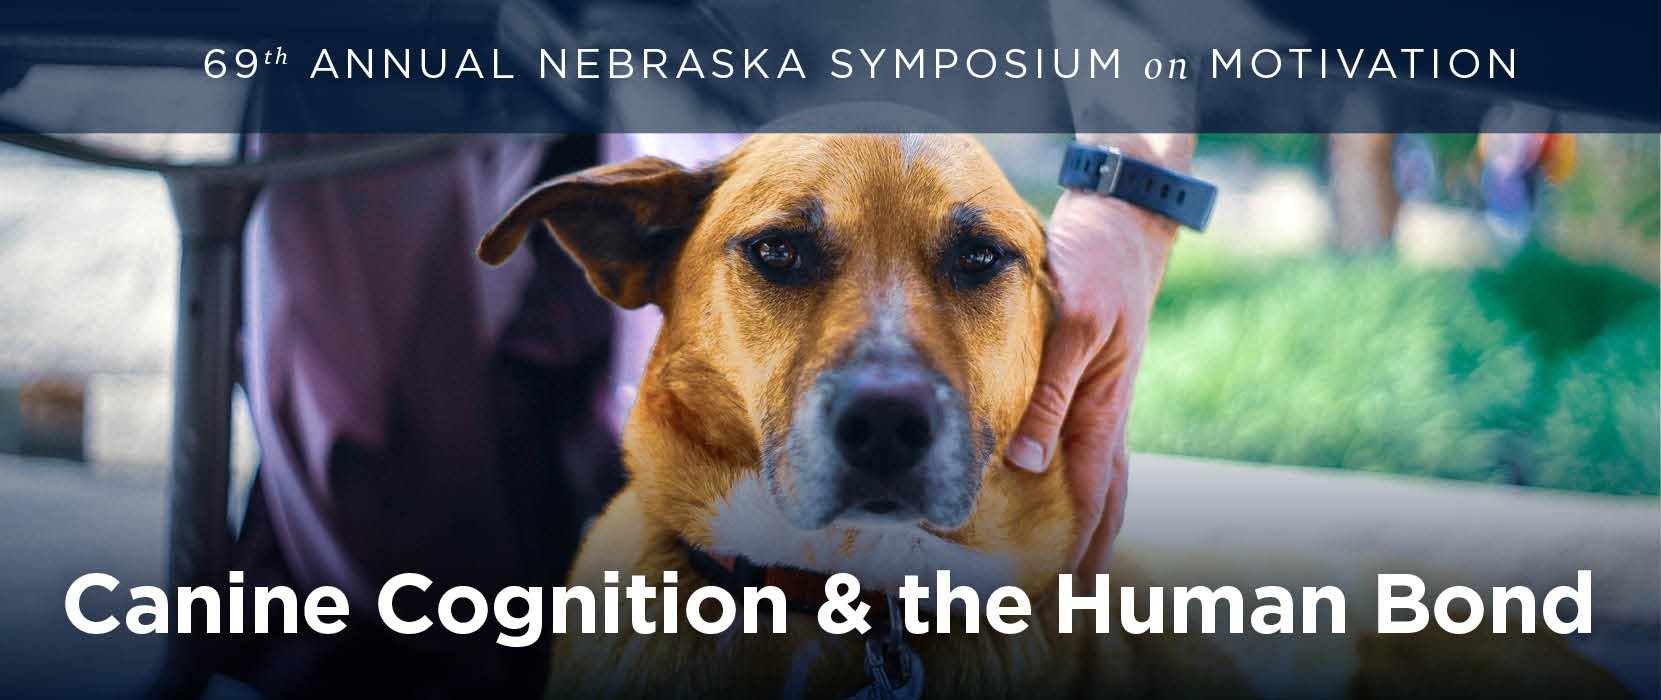 69th Annual Nebraska Symposium on Motivation: Canine Cognition and the Human Bond. Photo by: Nina Radulovic